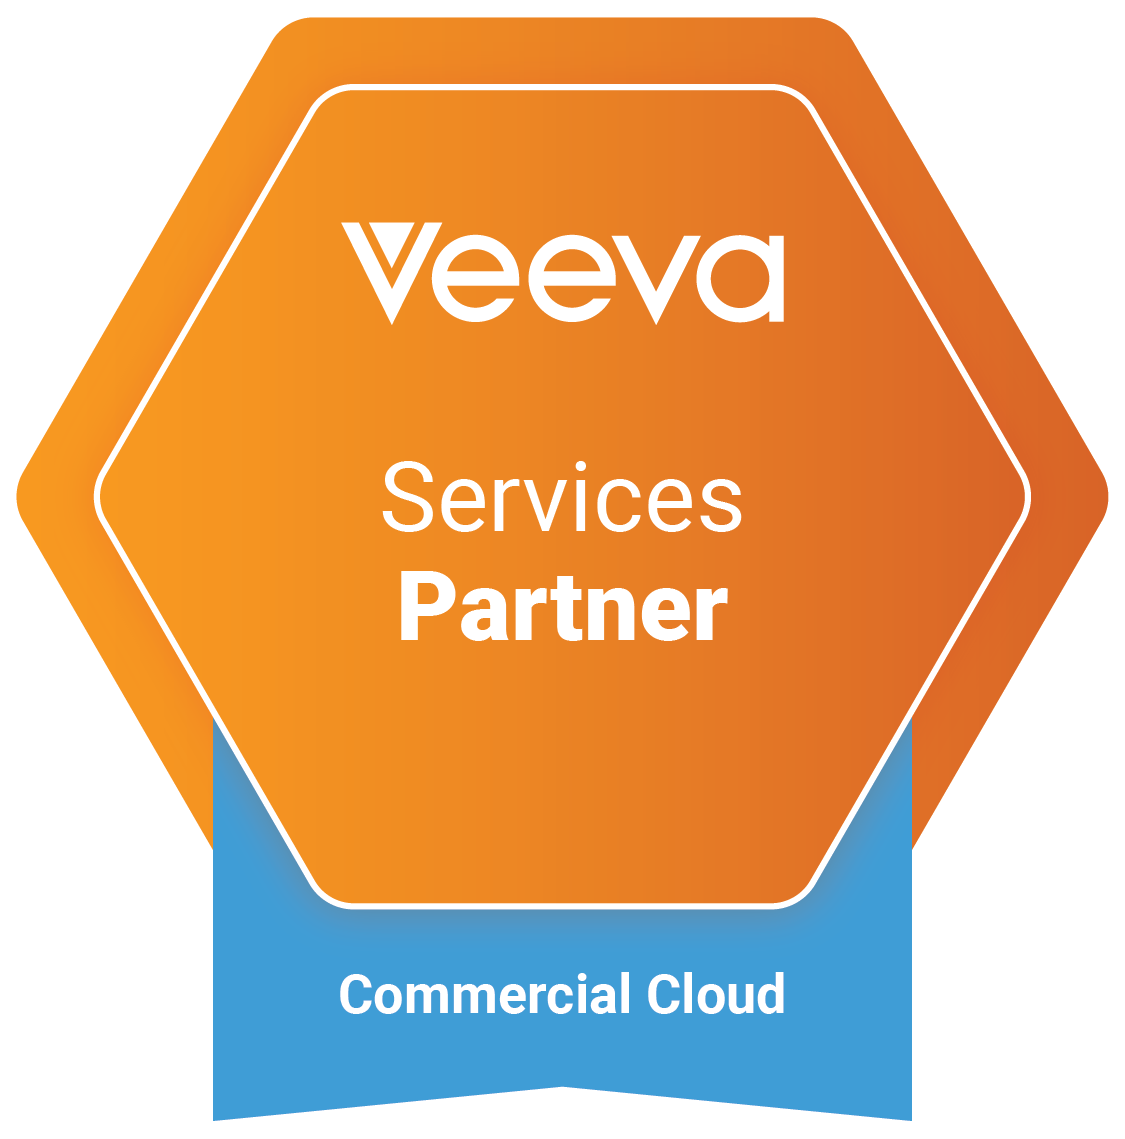 VEEVA Service Partner Commercial Cloud